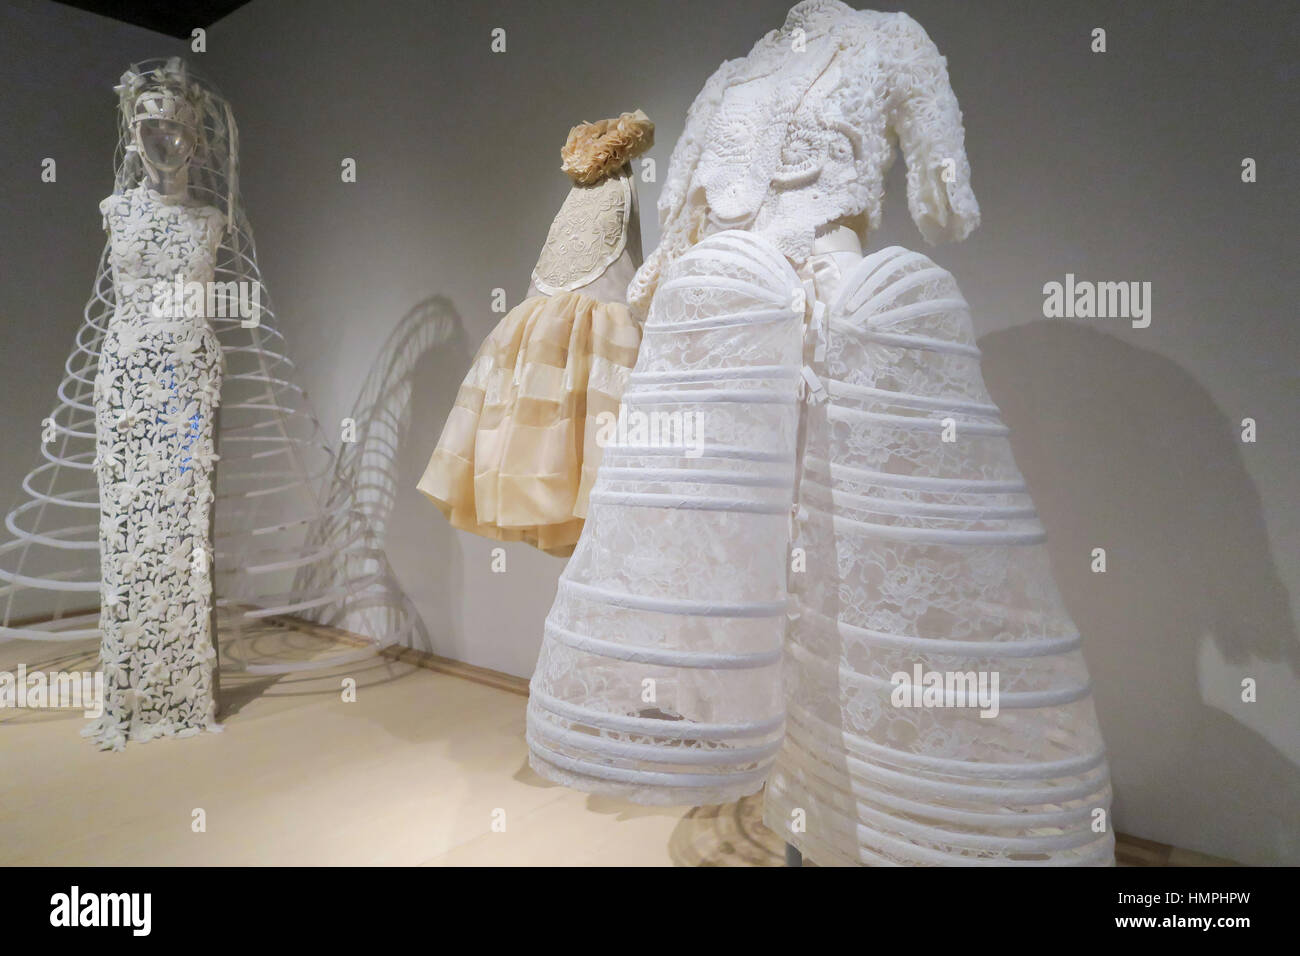 Masterworks Unpacking Fashion Exhibit at the Metropolitan Museum of